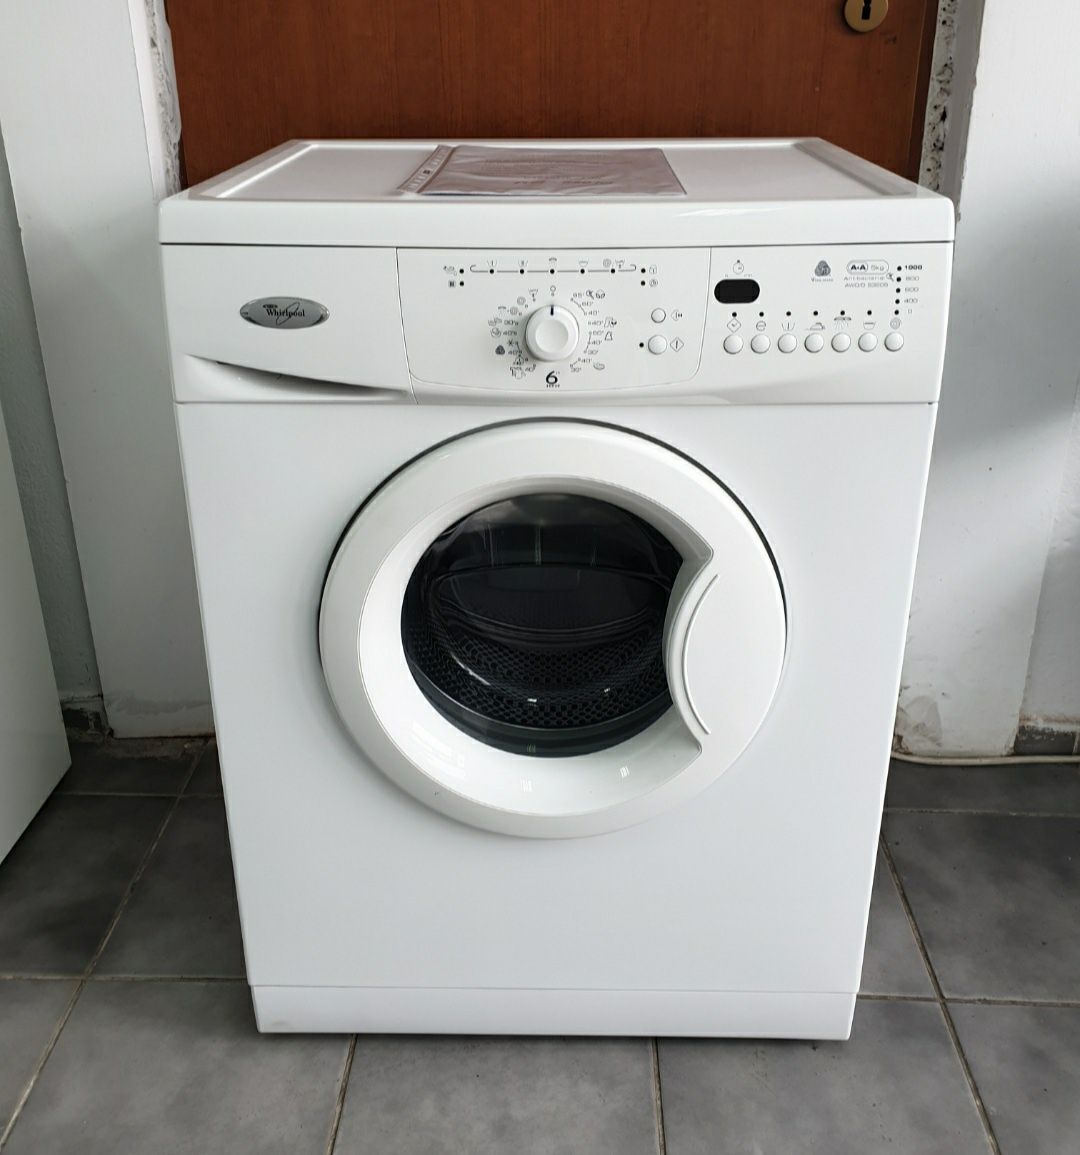 Masina de spălat rufe Whirlpool. awo.d 50102